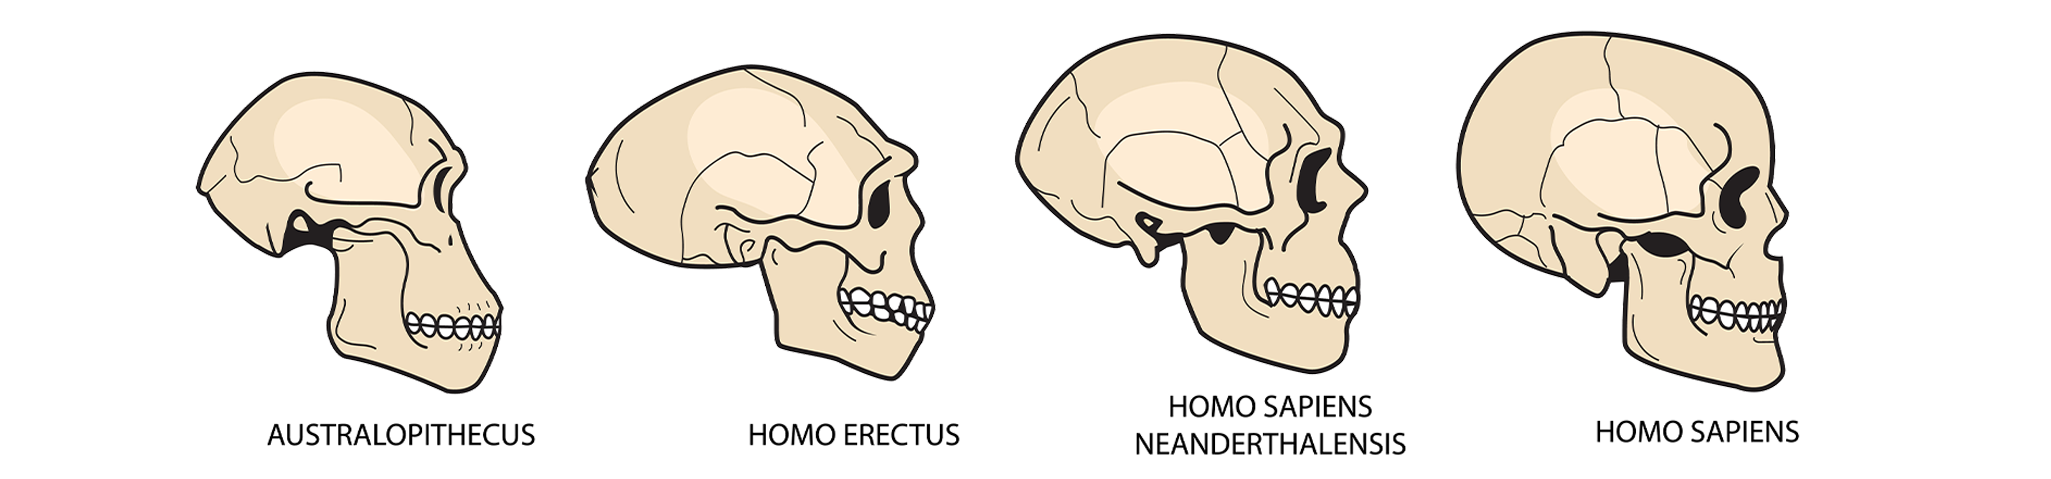 The evolution of the human skull.